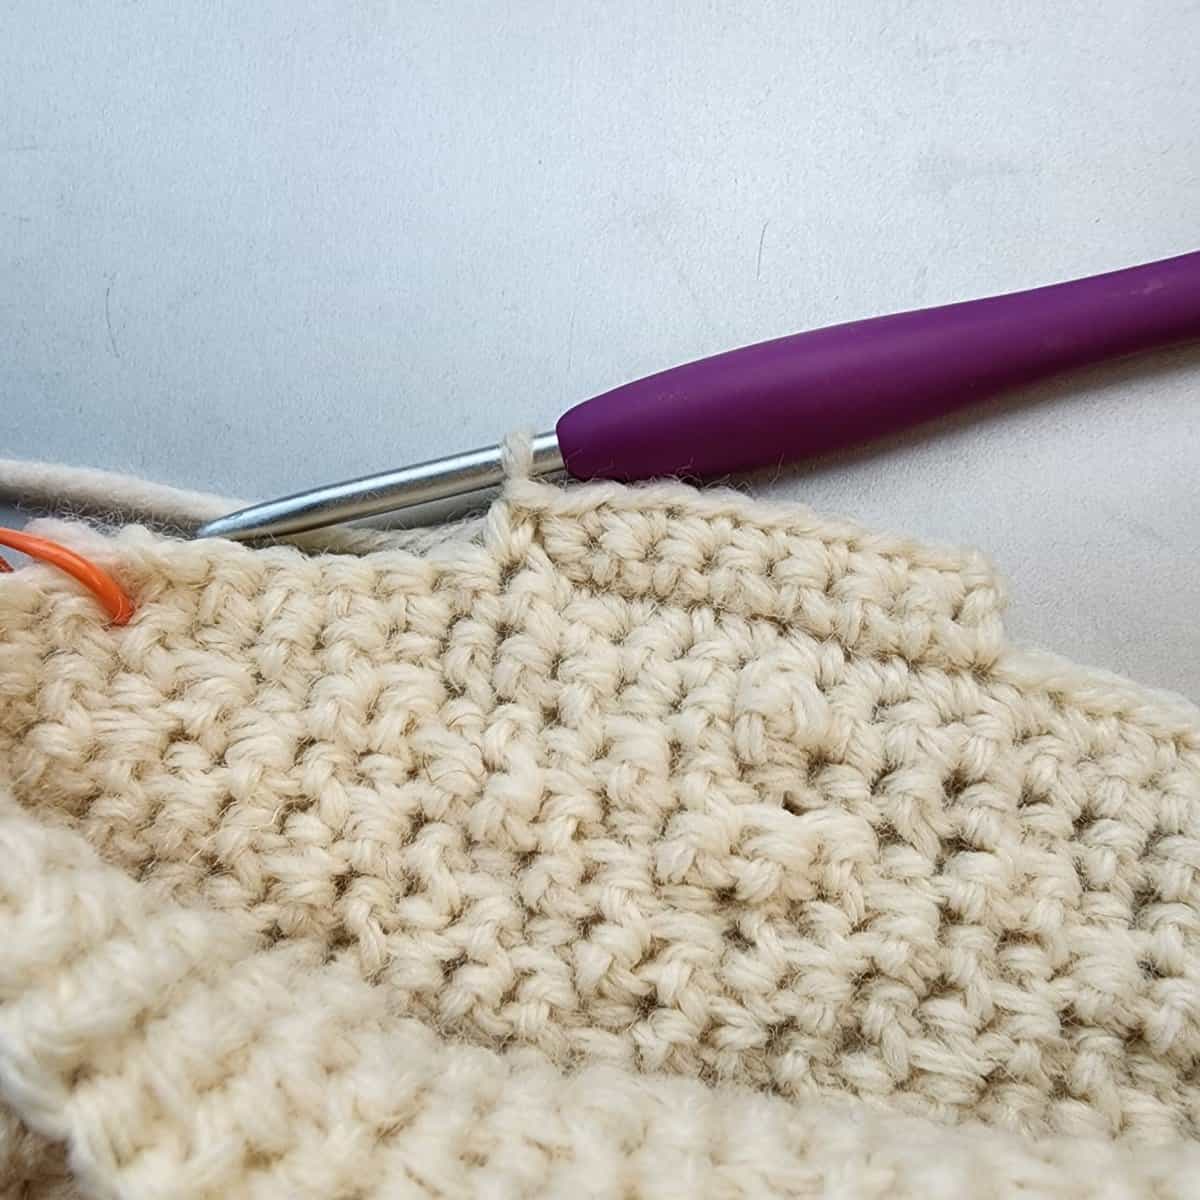 stocking heel construction on crochet stocking